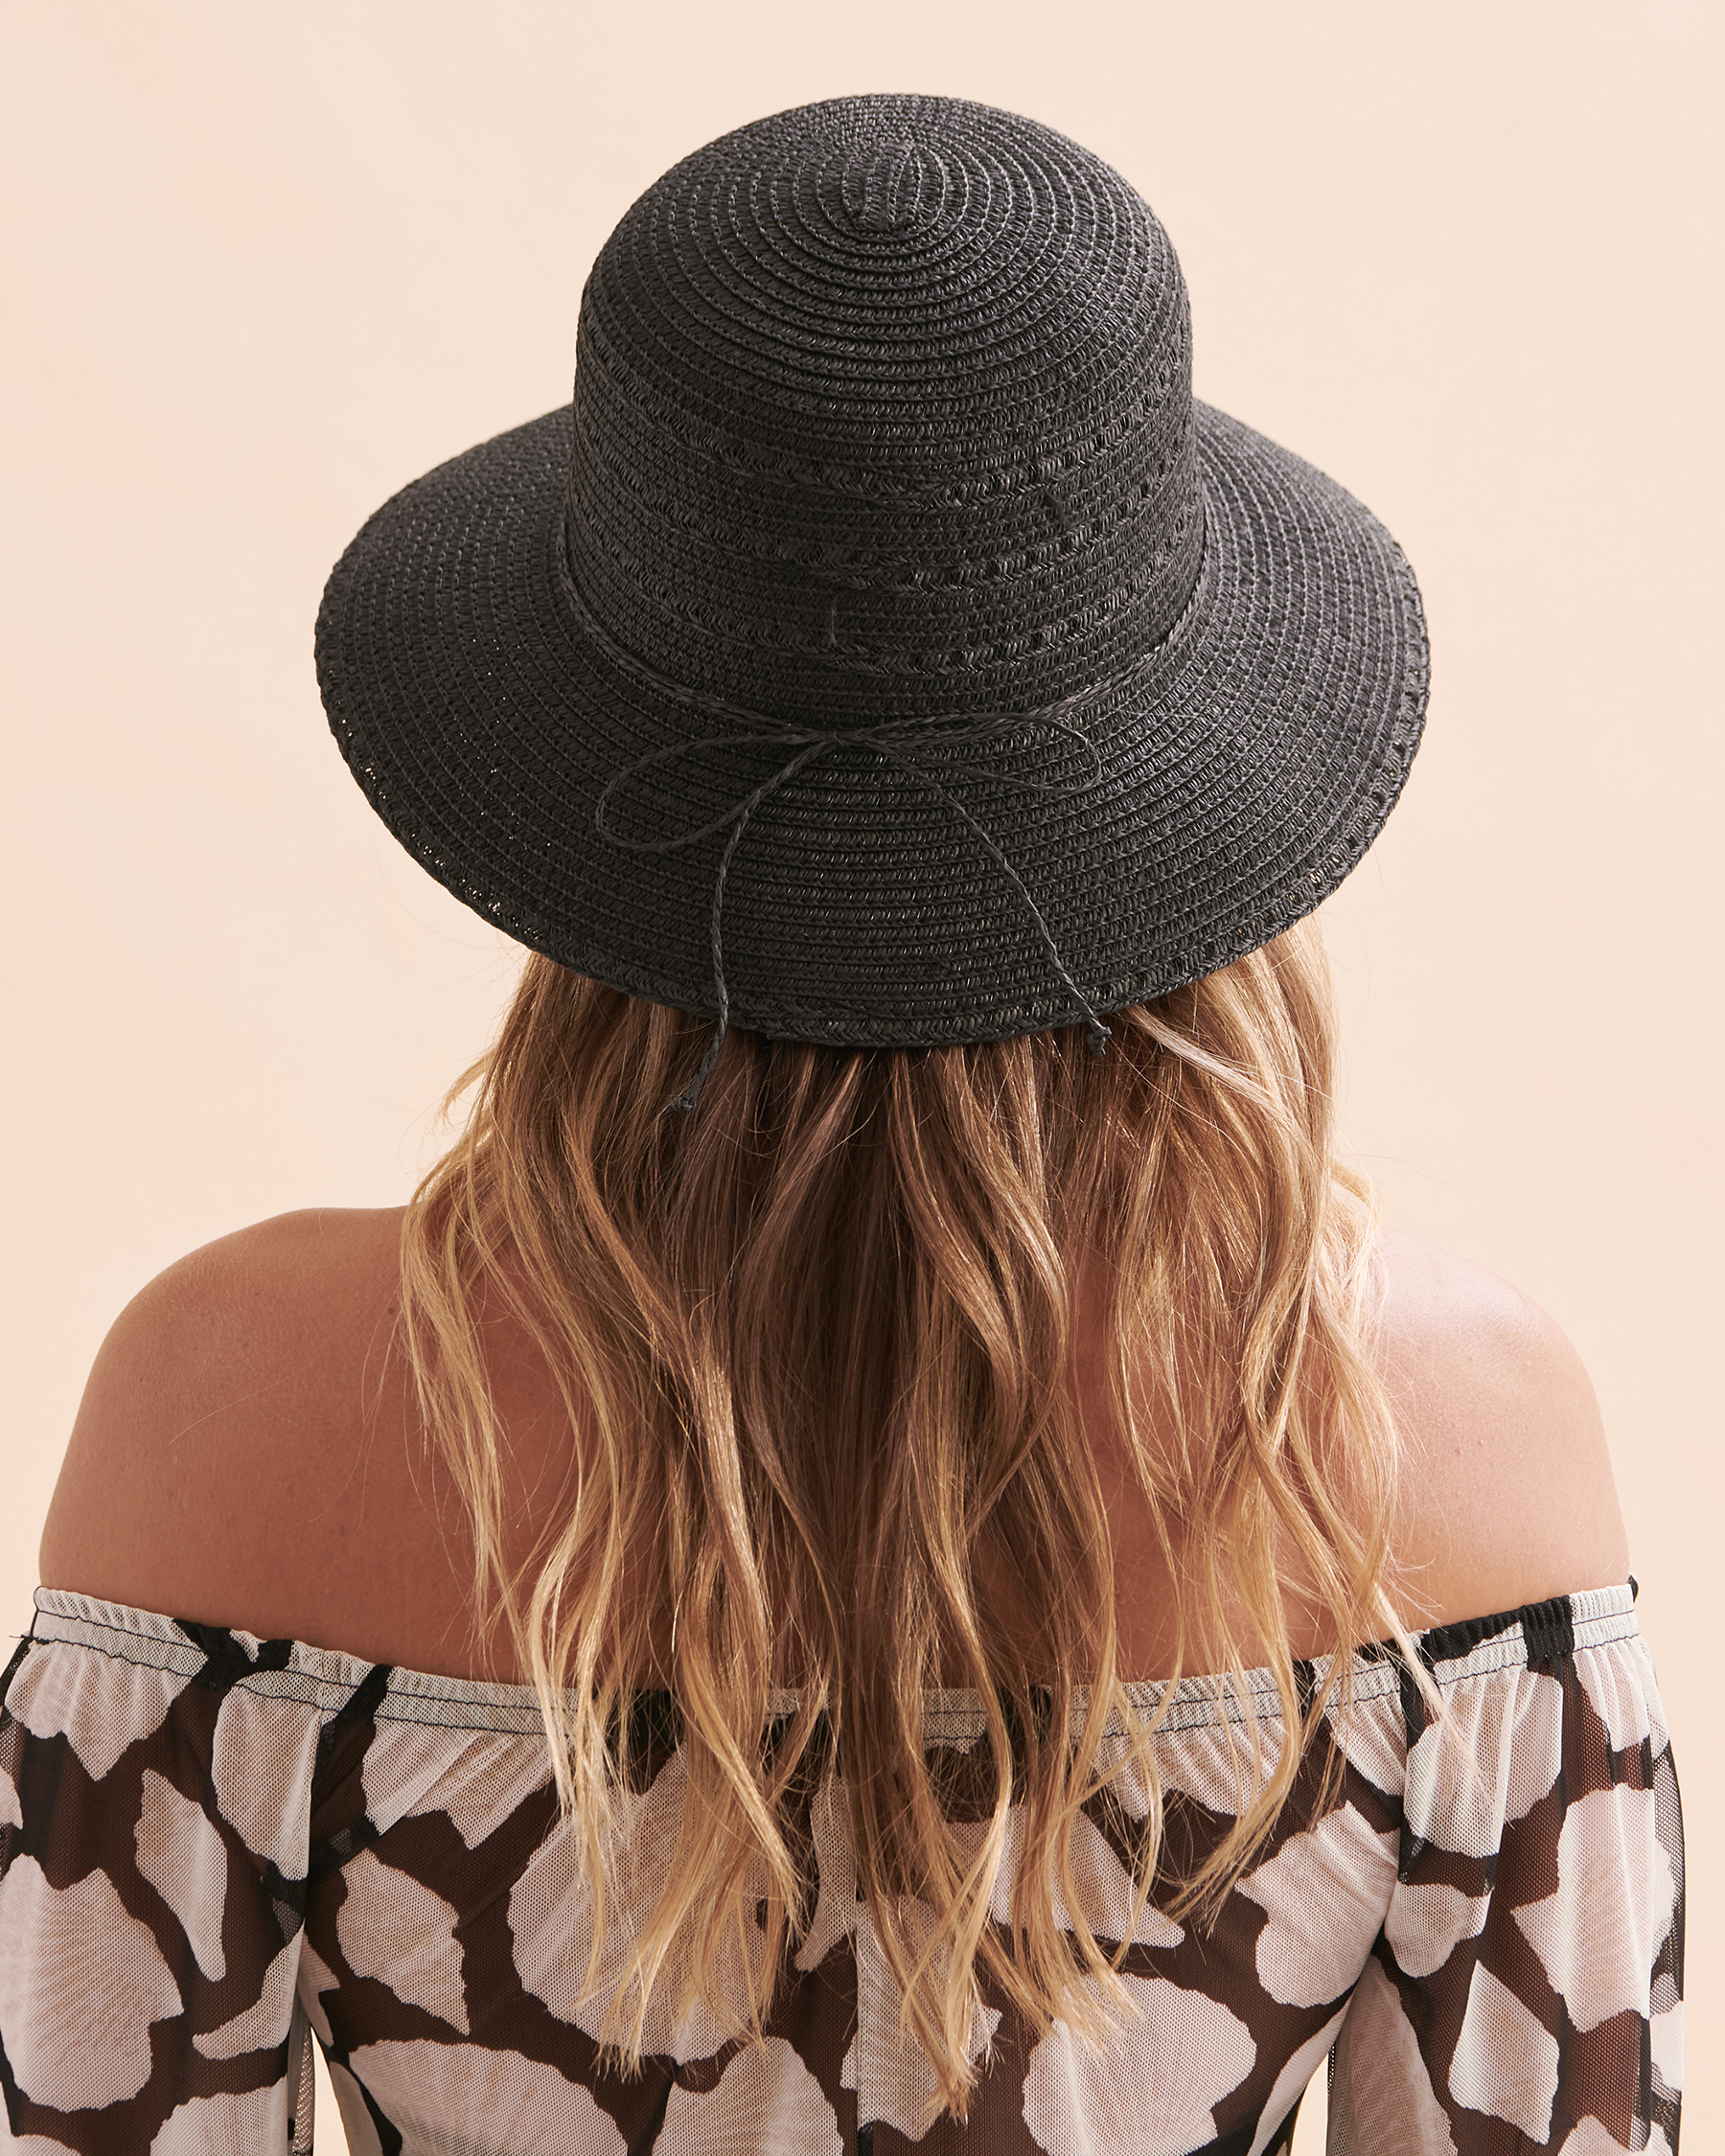 Women's hats from popular brands